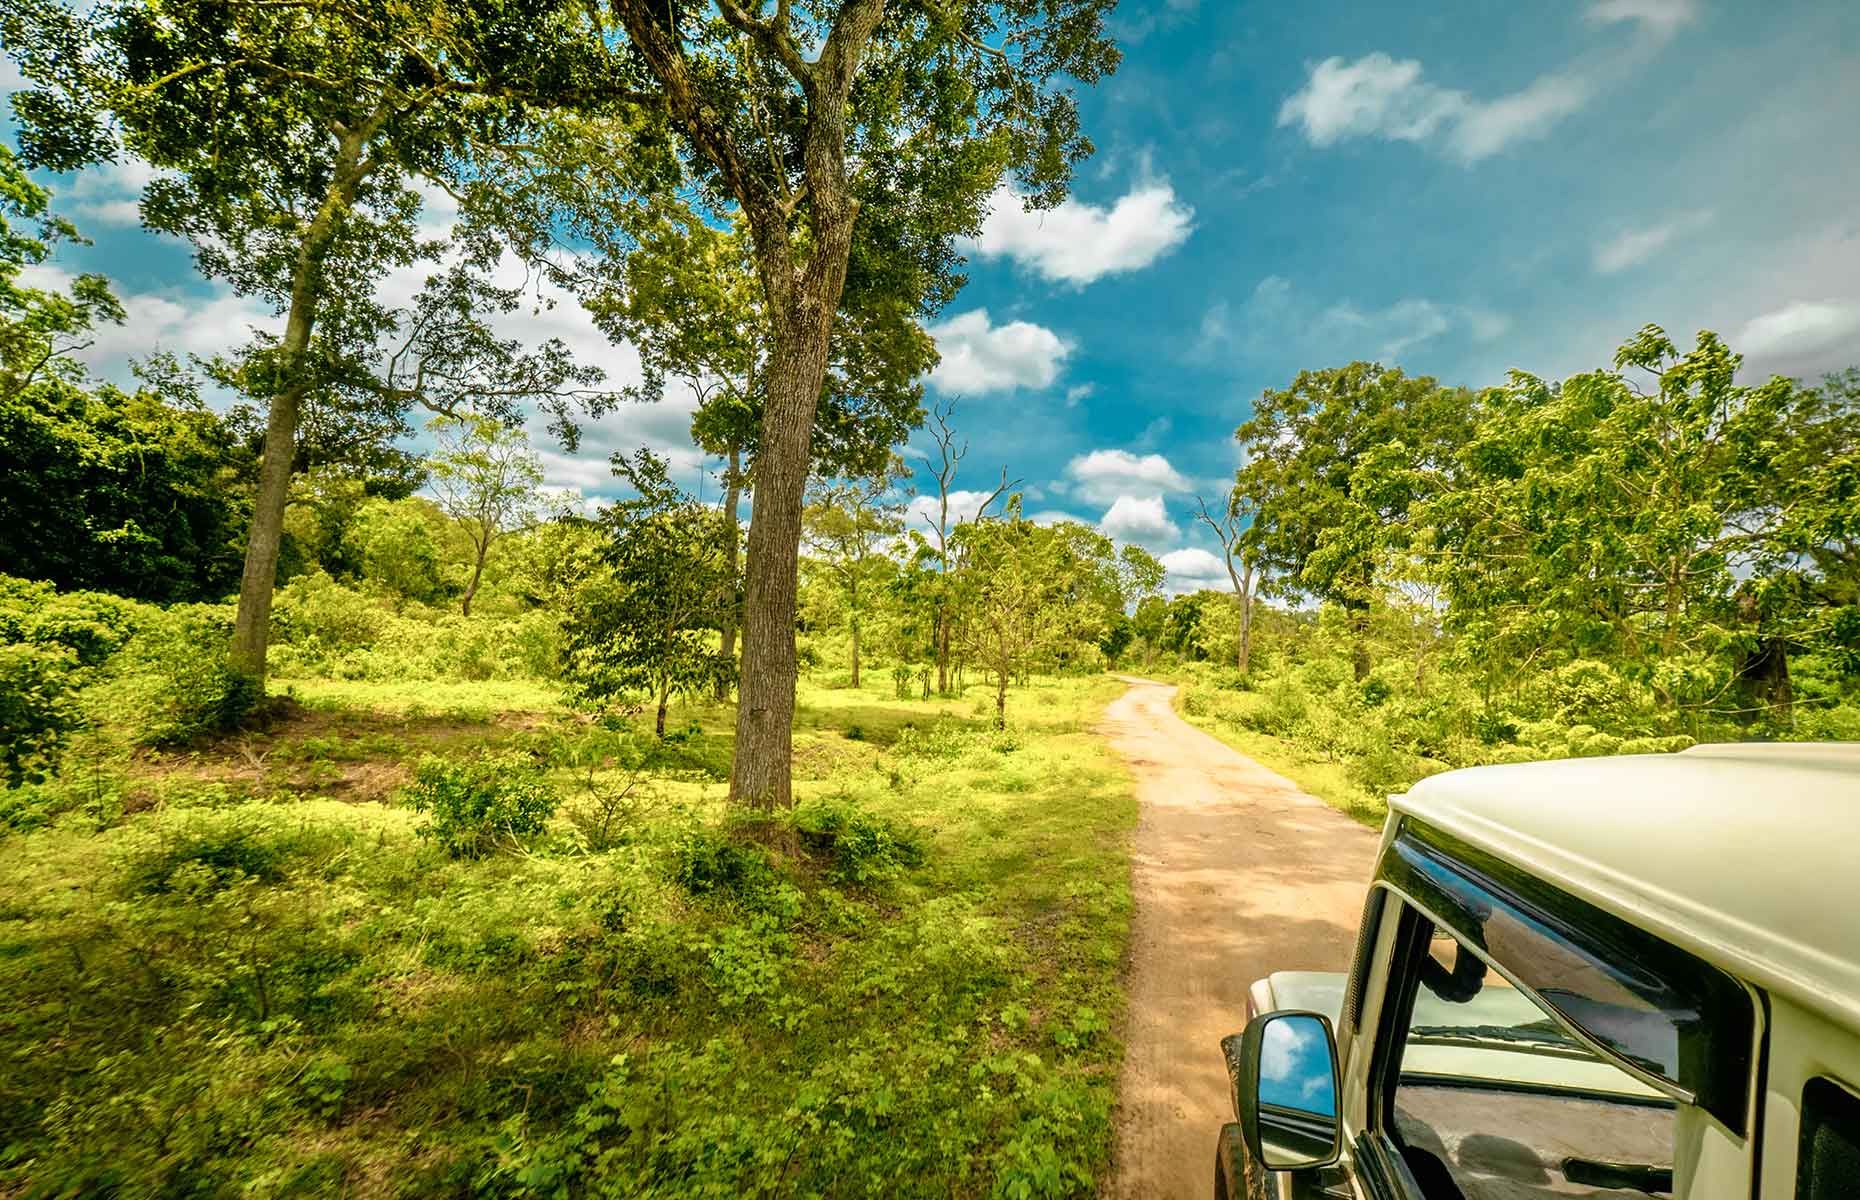 A jeep ride in Yala National Park, Sri Lanka (Image: Perfect Lazybones/Shutterstock)